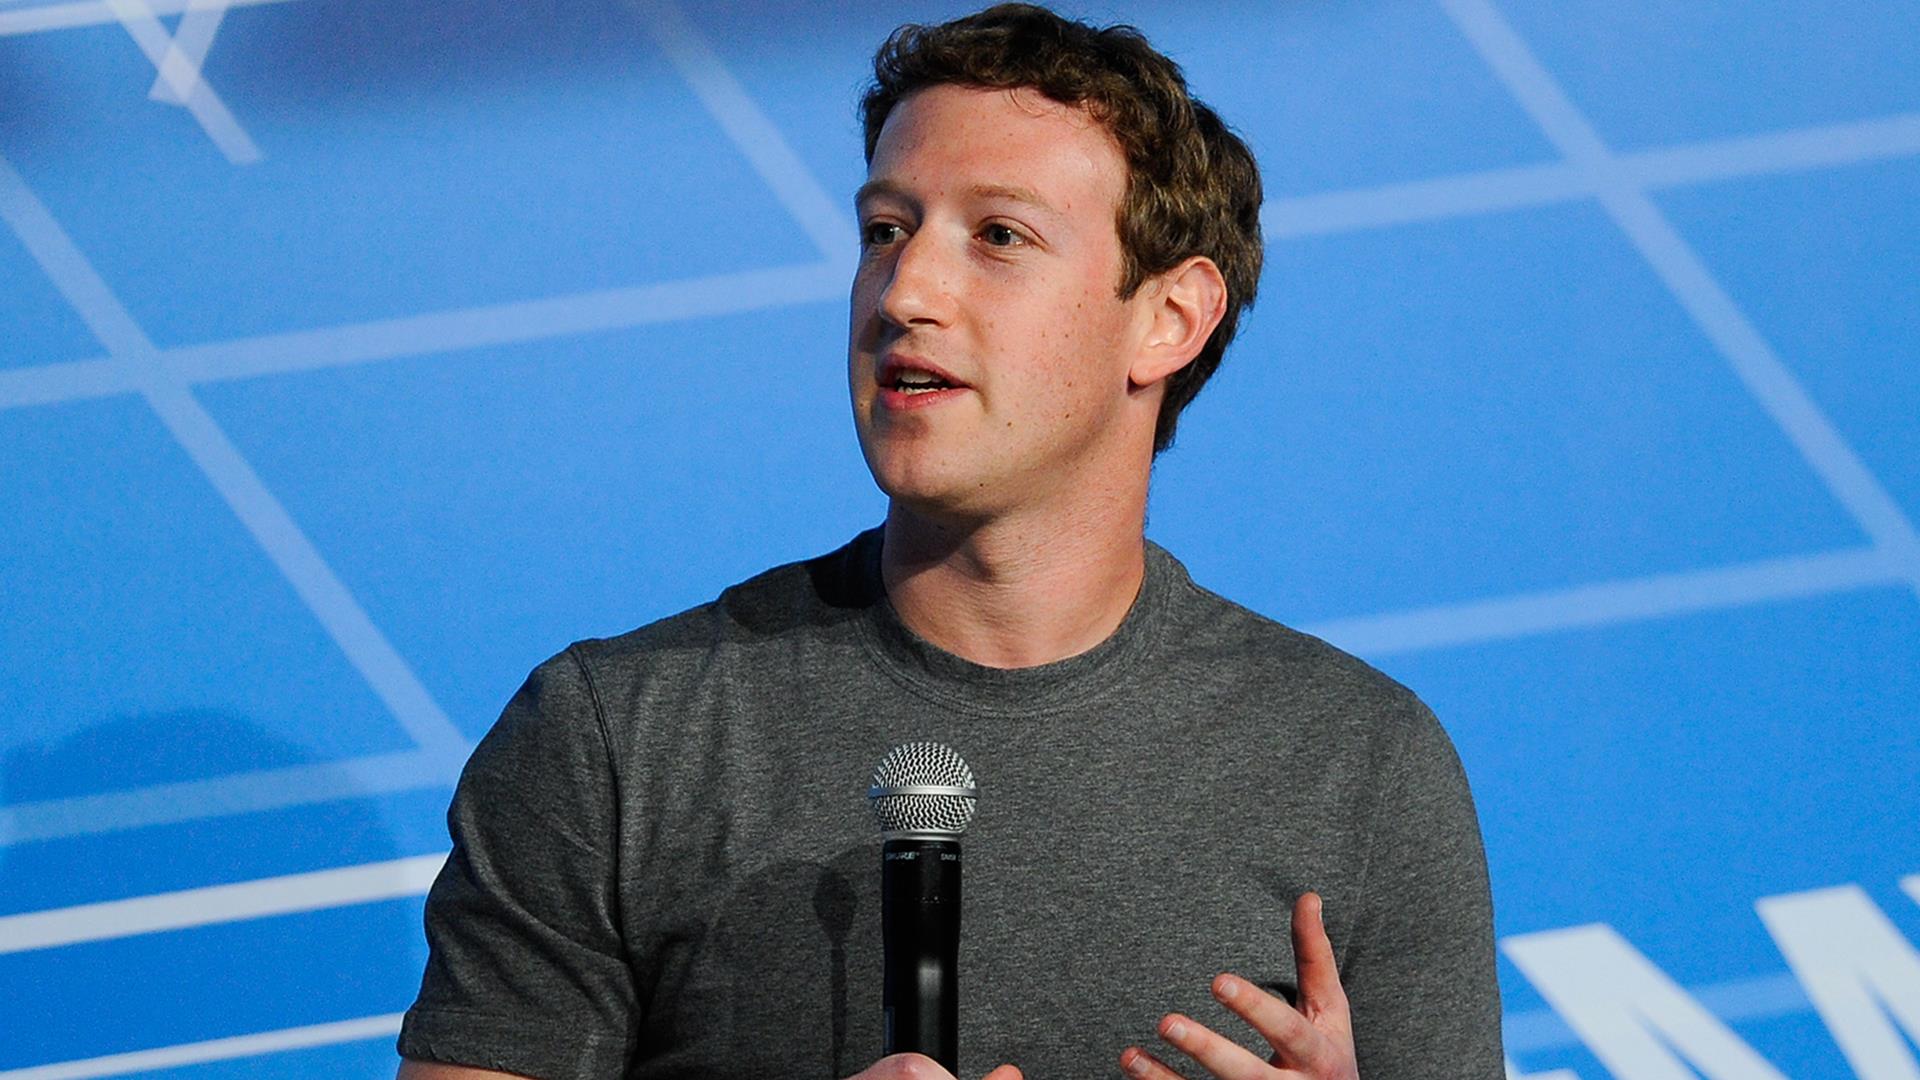 Could Facebook CEO Mark Zuckerberg be considering a run for president?